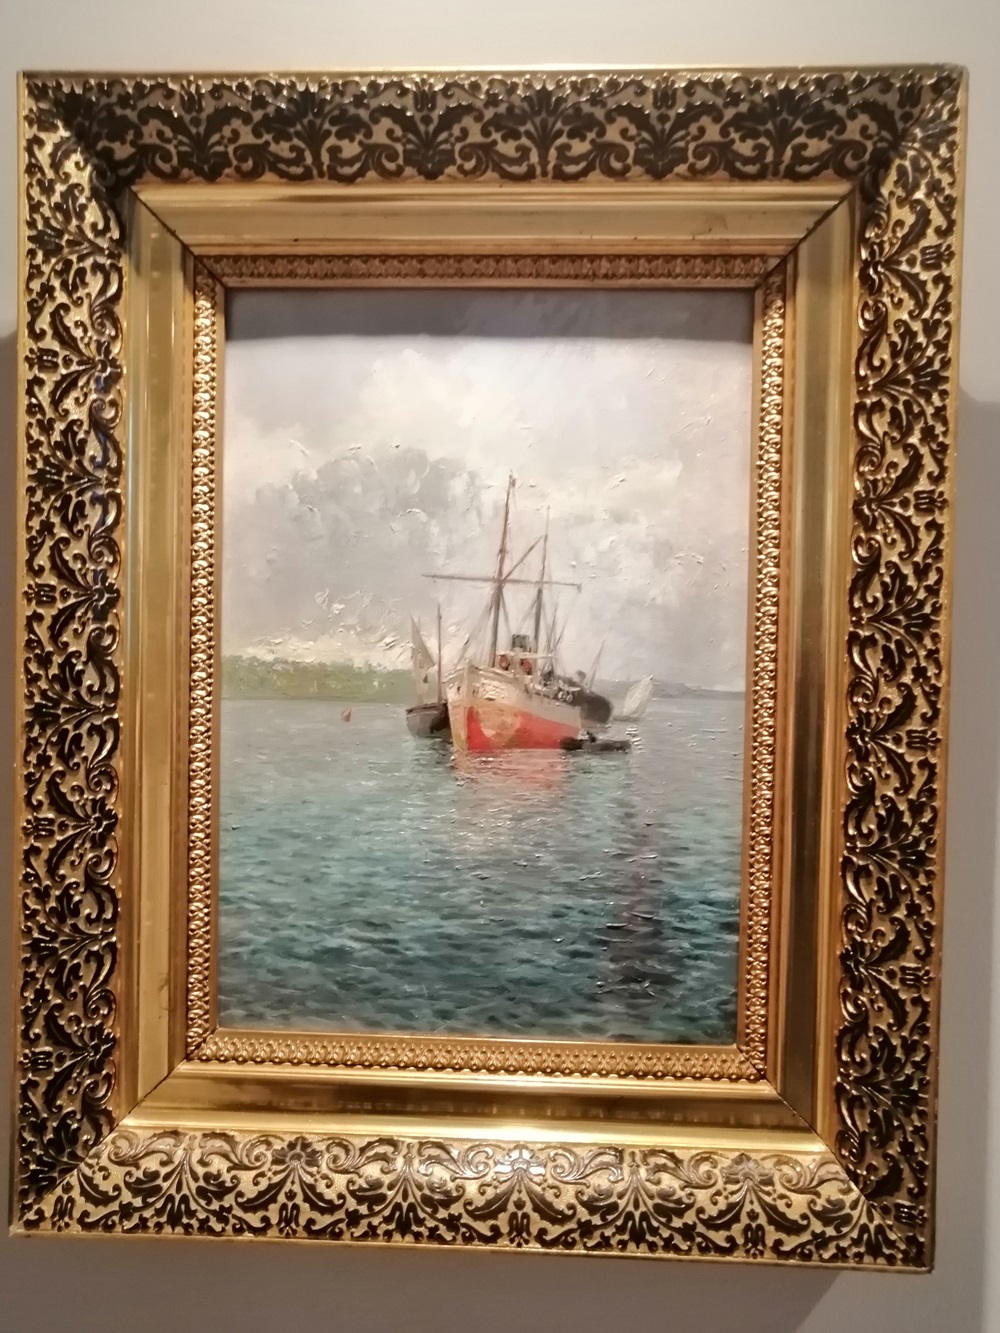 GABRIEL OSMUNDO GÓMEZ. (1856 -1915), "SANTANDER", ÓLEO SOBRE TABLA / 37 x 26 cm. ( REGRESAMOS )